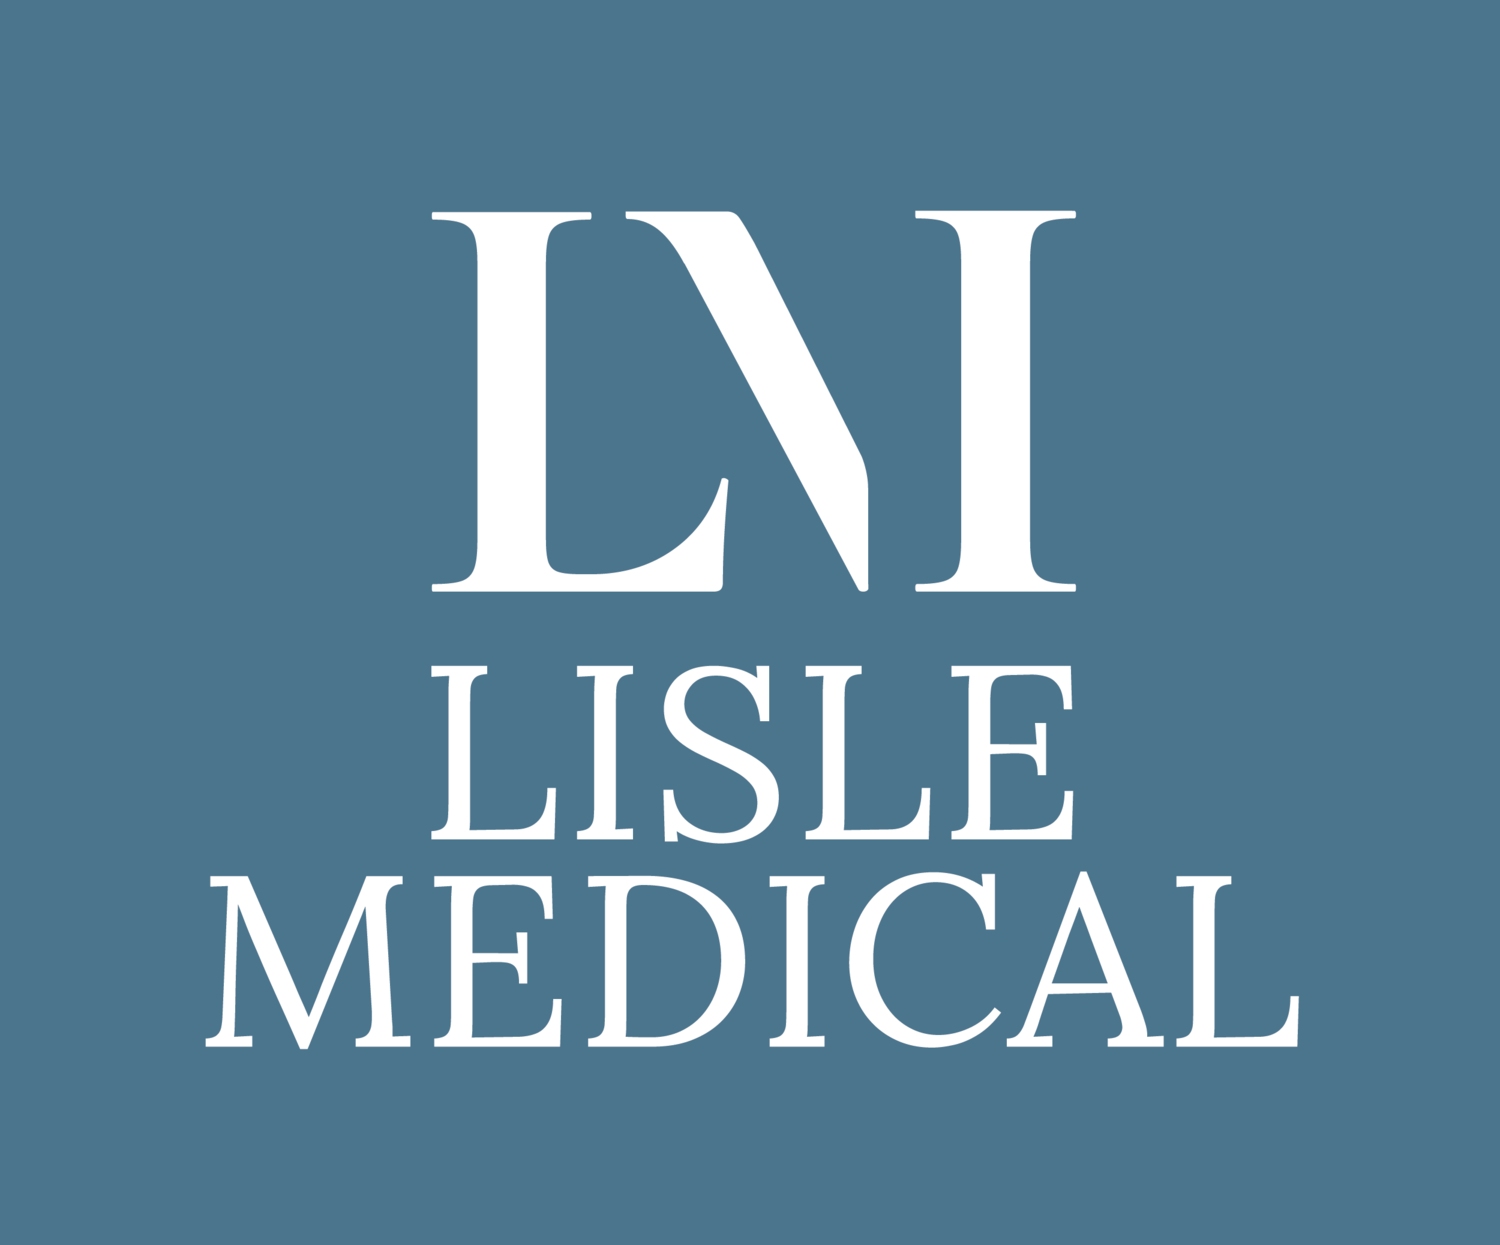 Lisle Medical - Mobile Private GP for West Sussex, Surrey, Hants